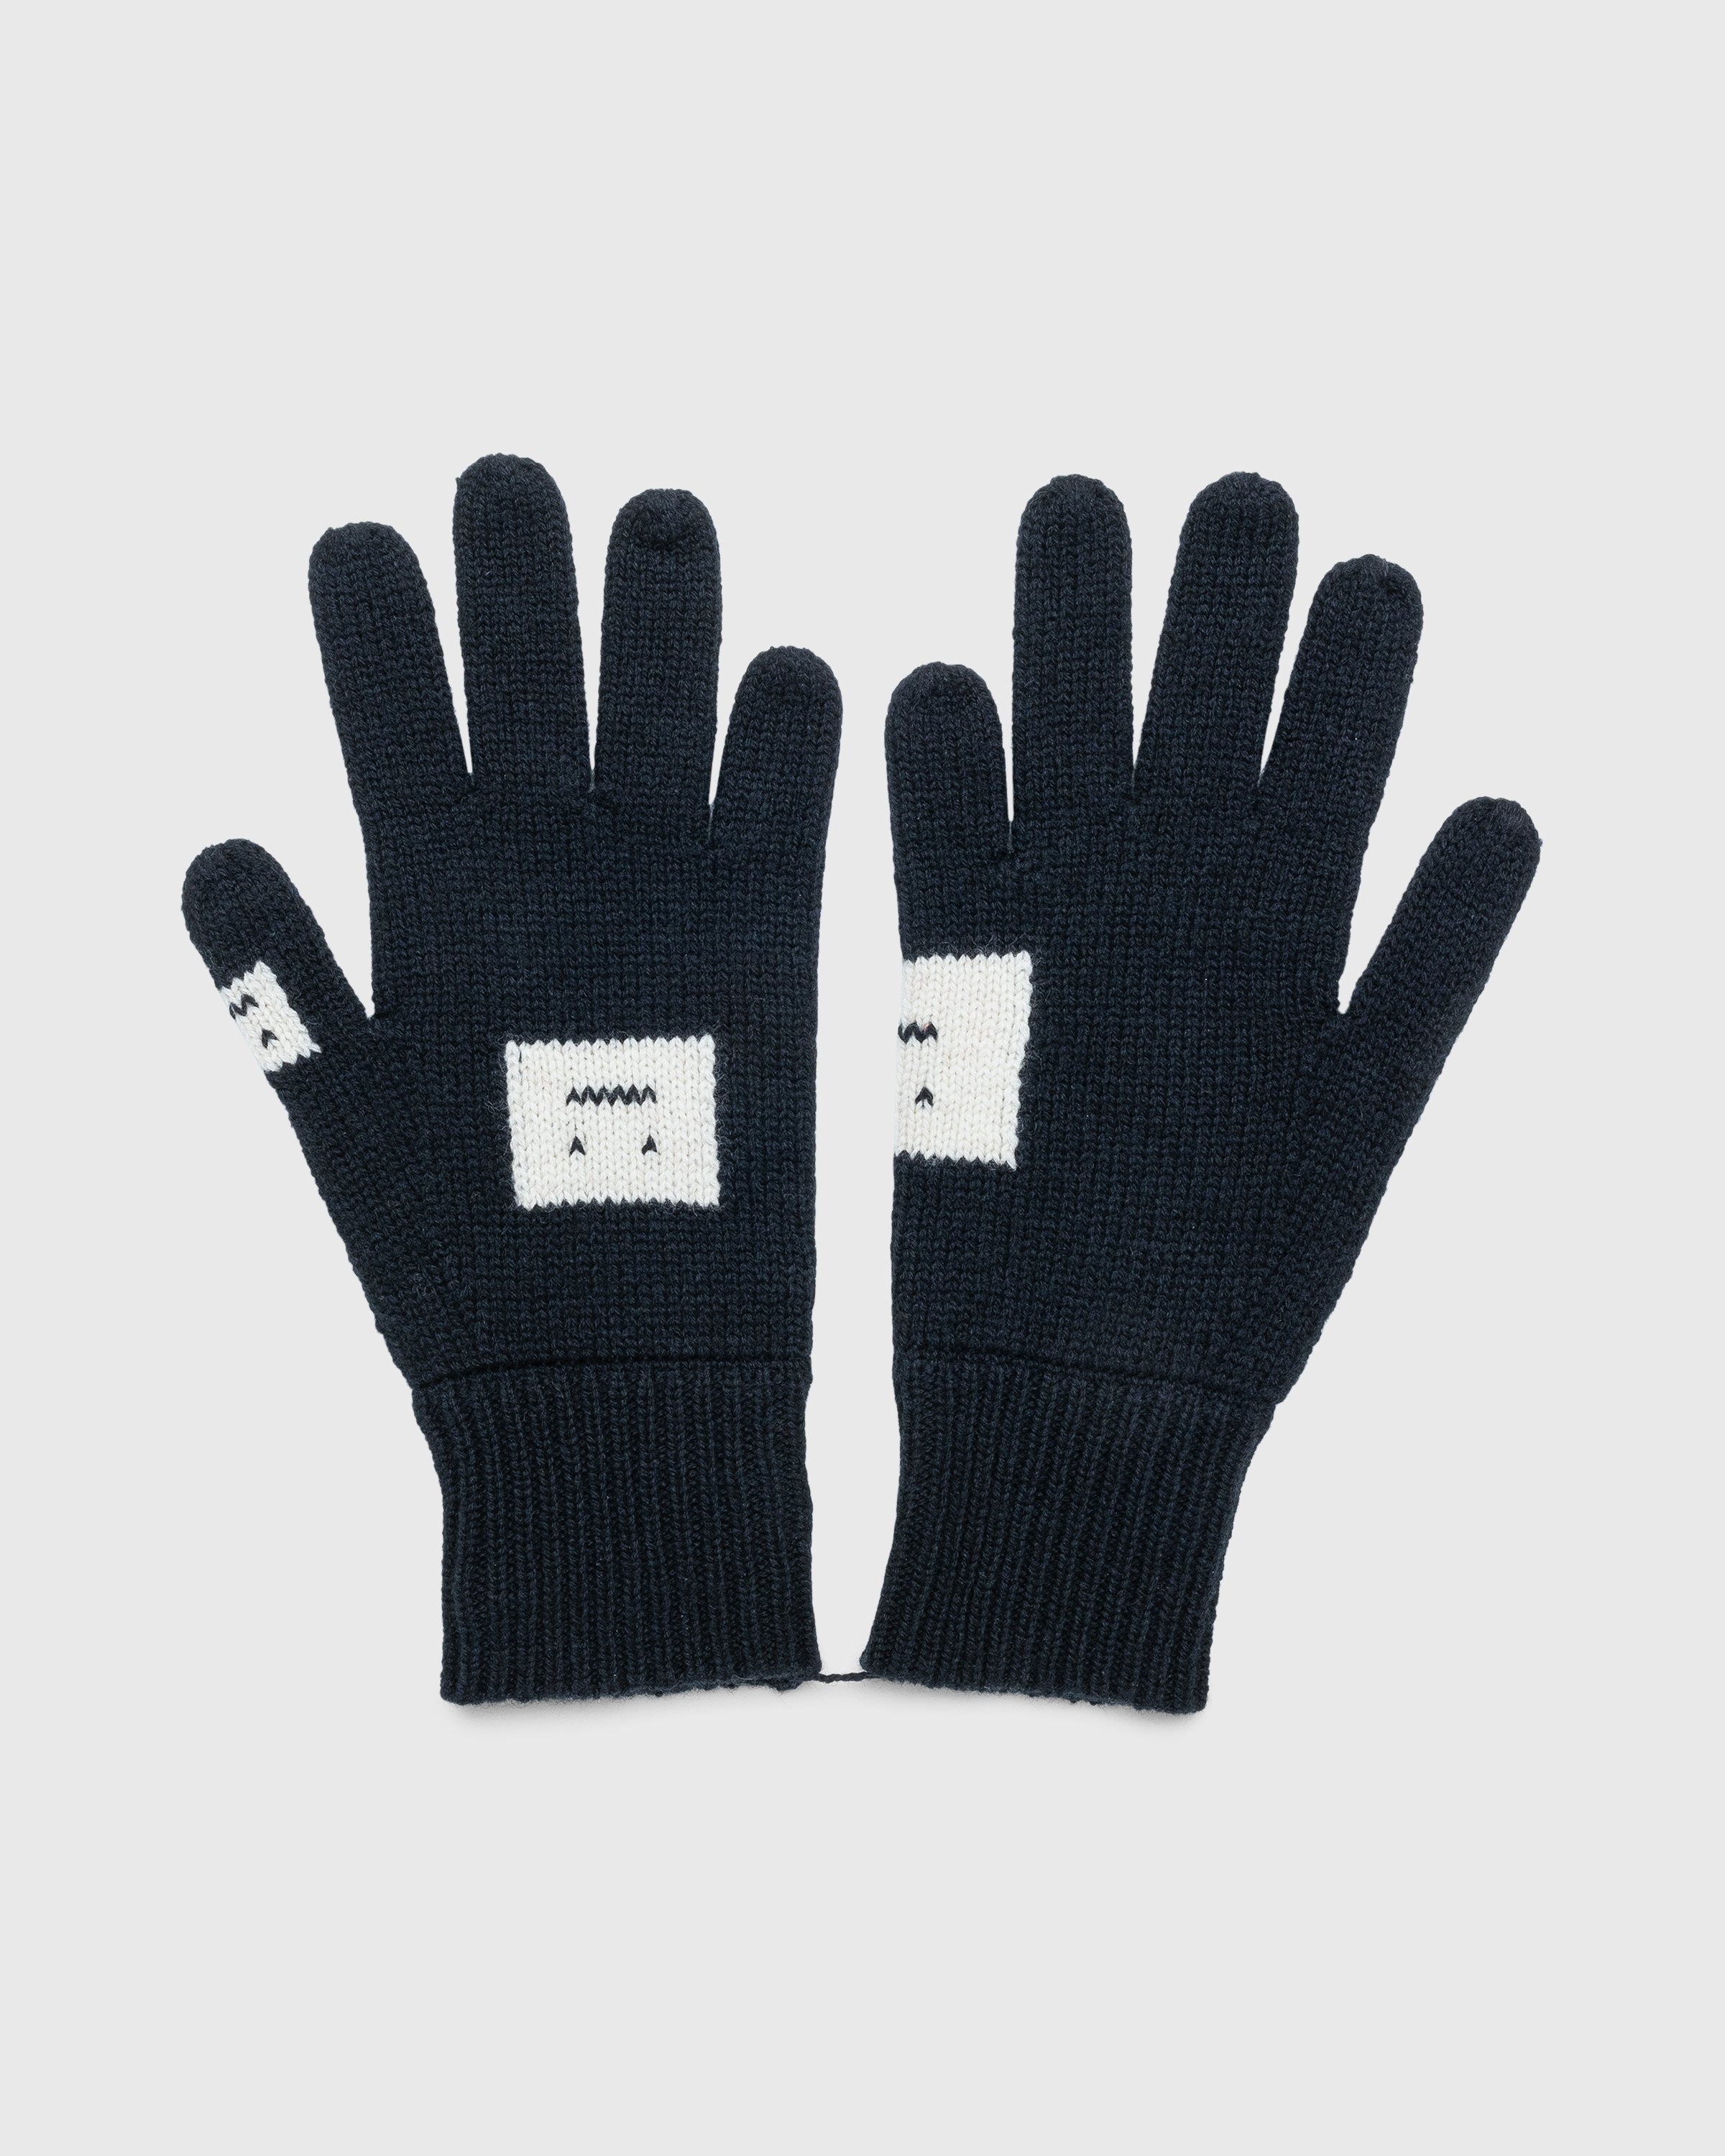 Acne Studios - Knit Gloves Black/Oatmeal Melange - Accessories - Black - Image 1